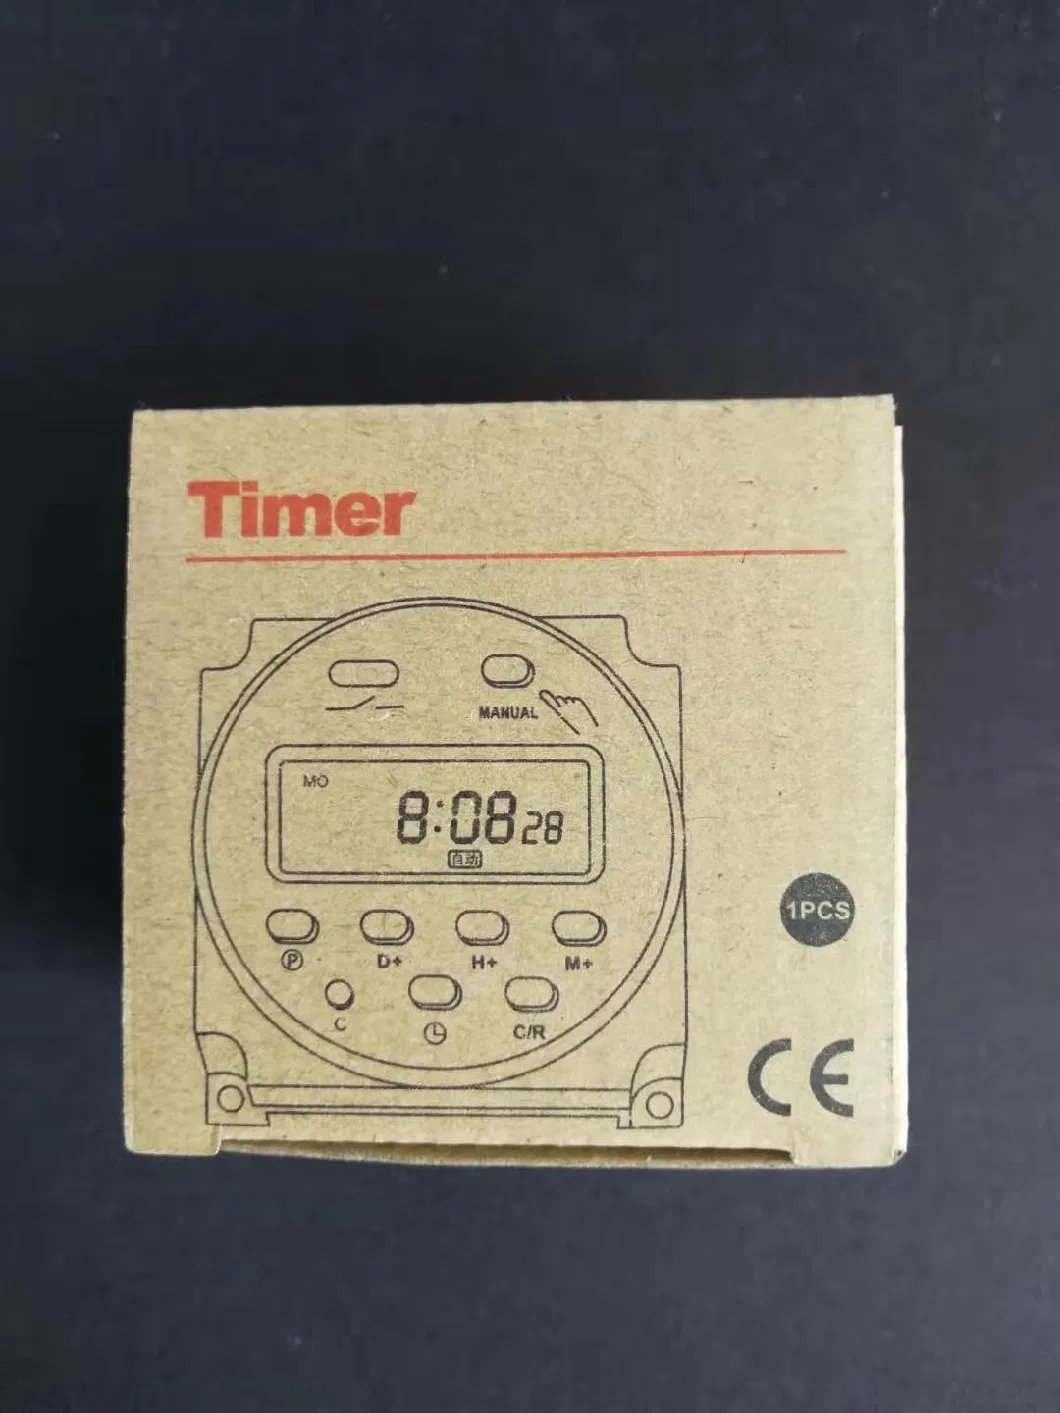 Oktimer Digital Timer Switch Cn101A